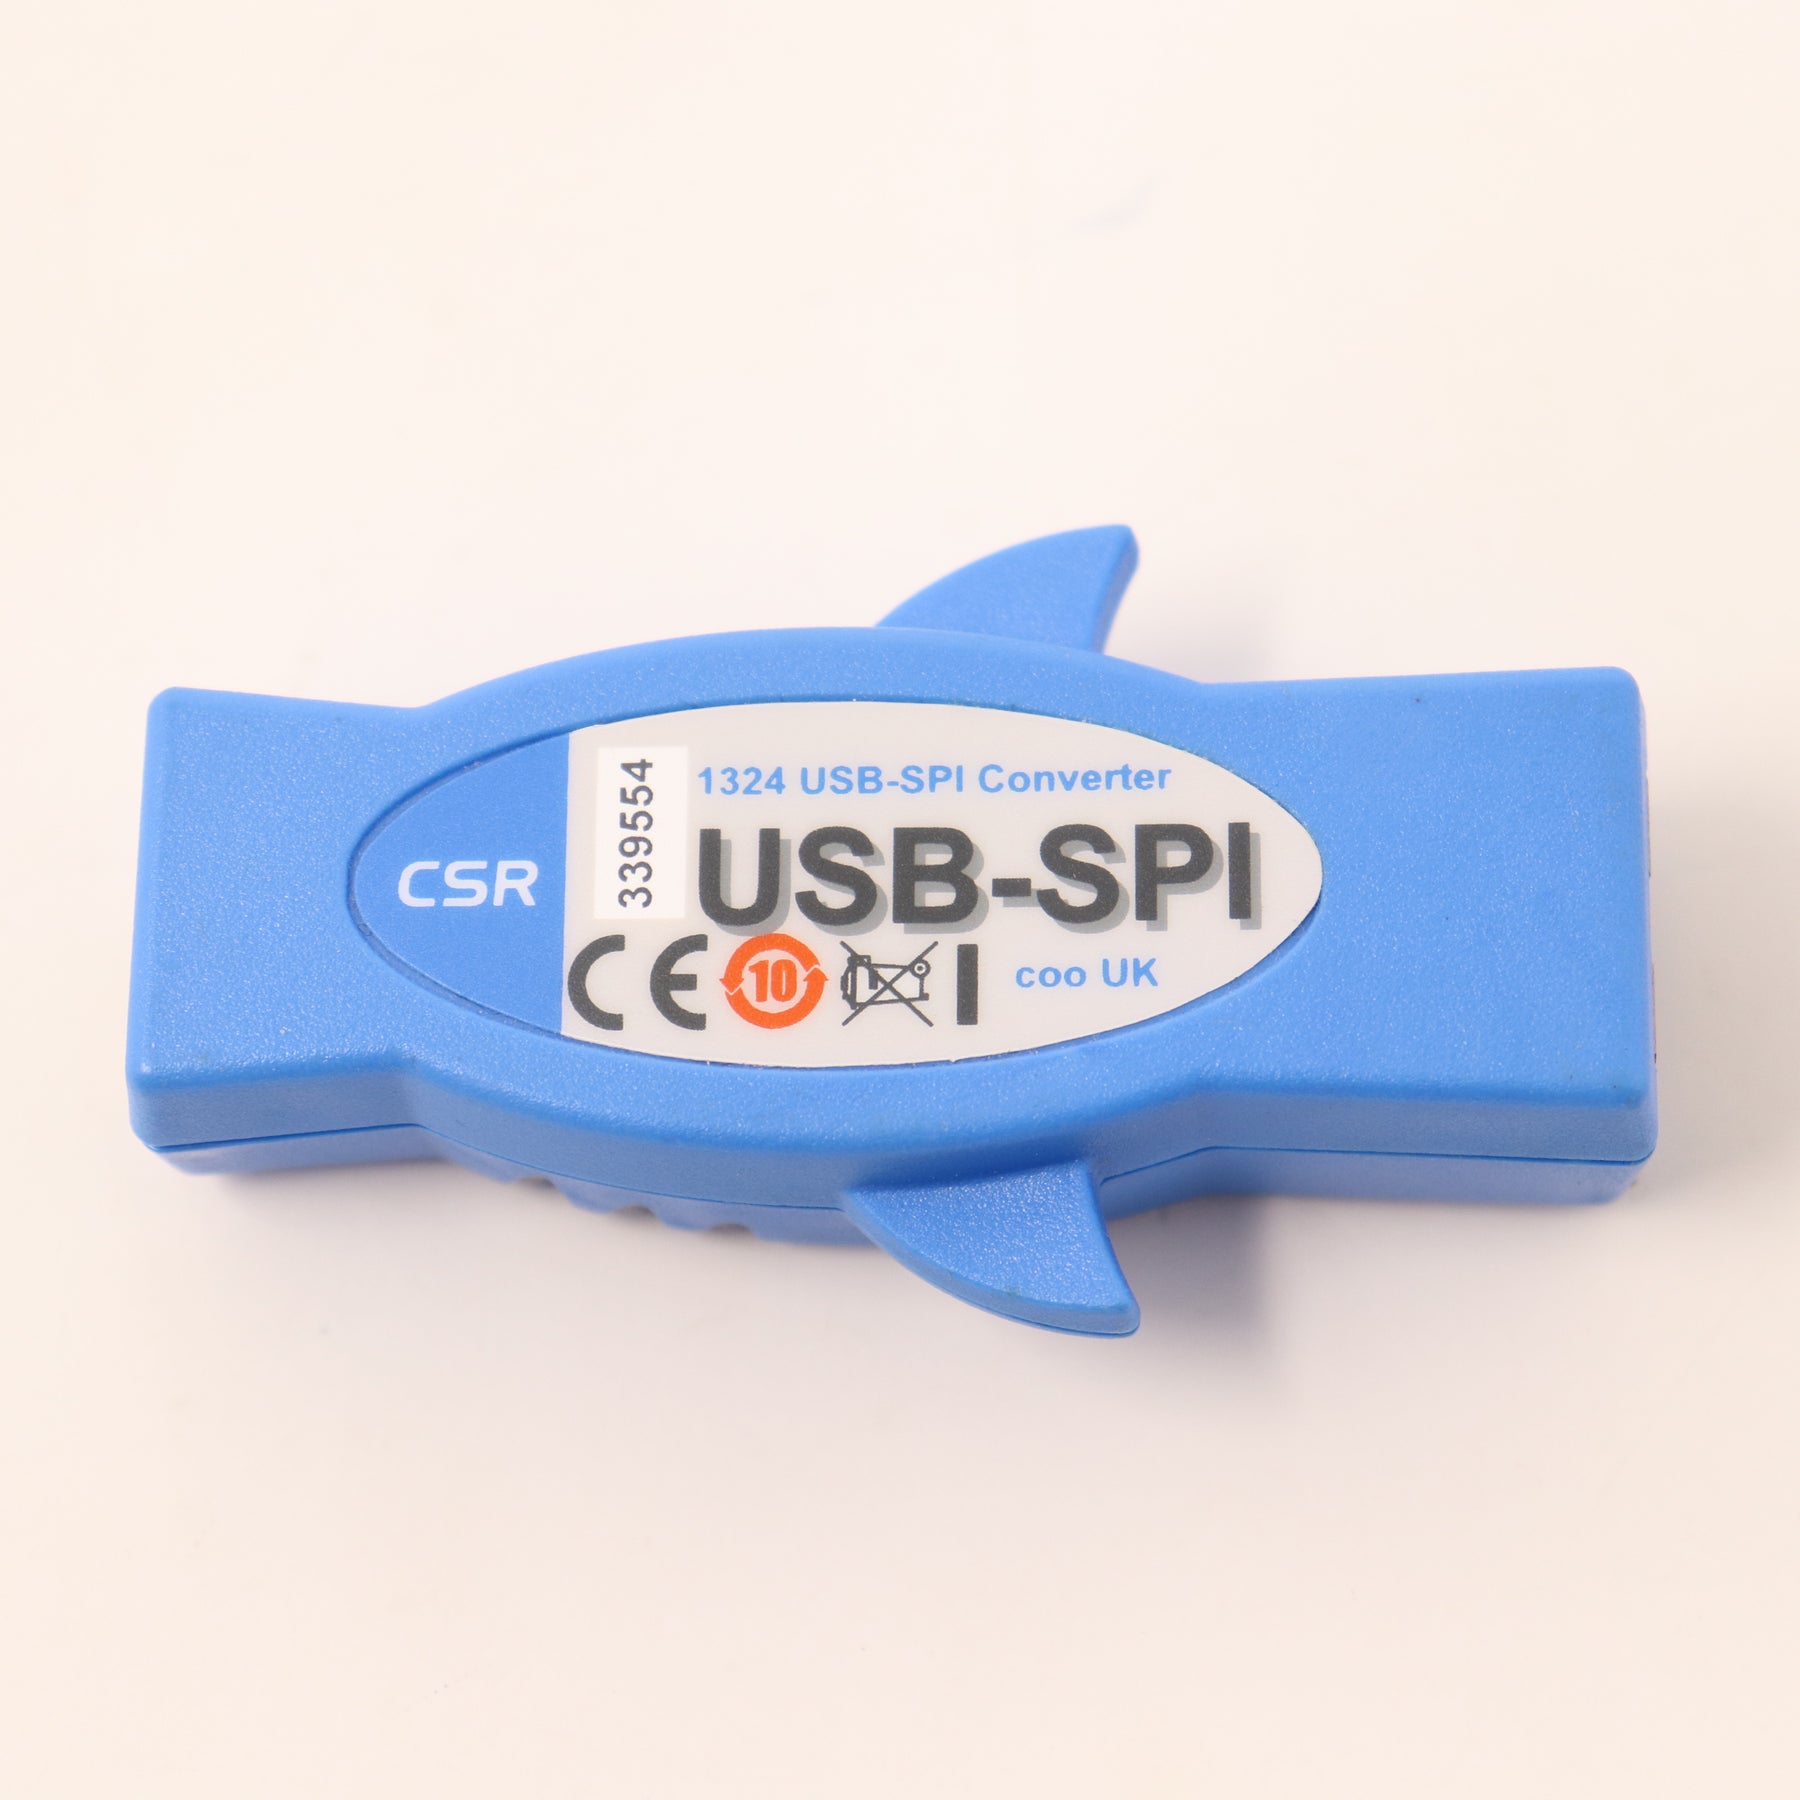 CSR "Babelfish" USB-SPI 1324 Converter